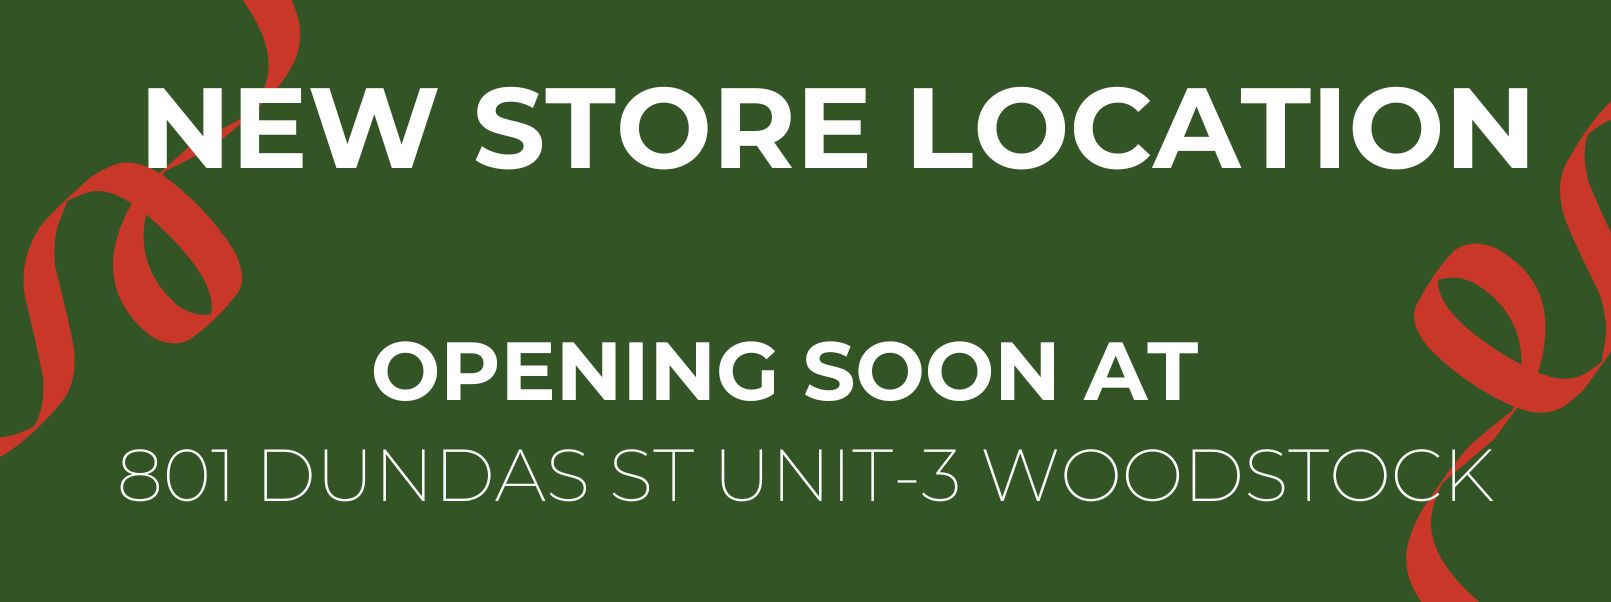 Woodstock new store opening